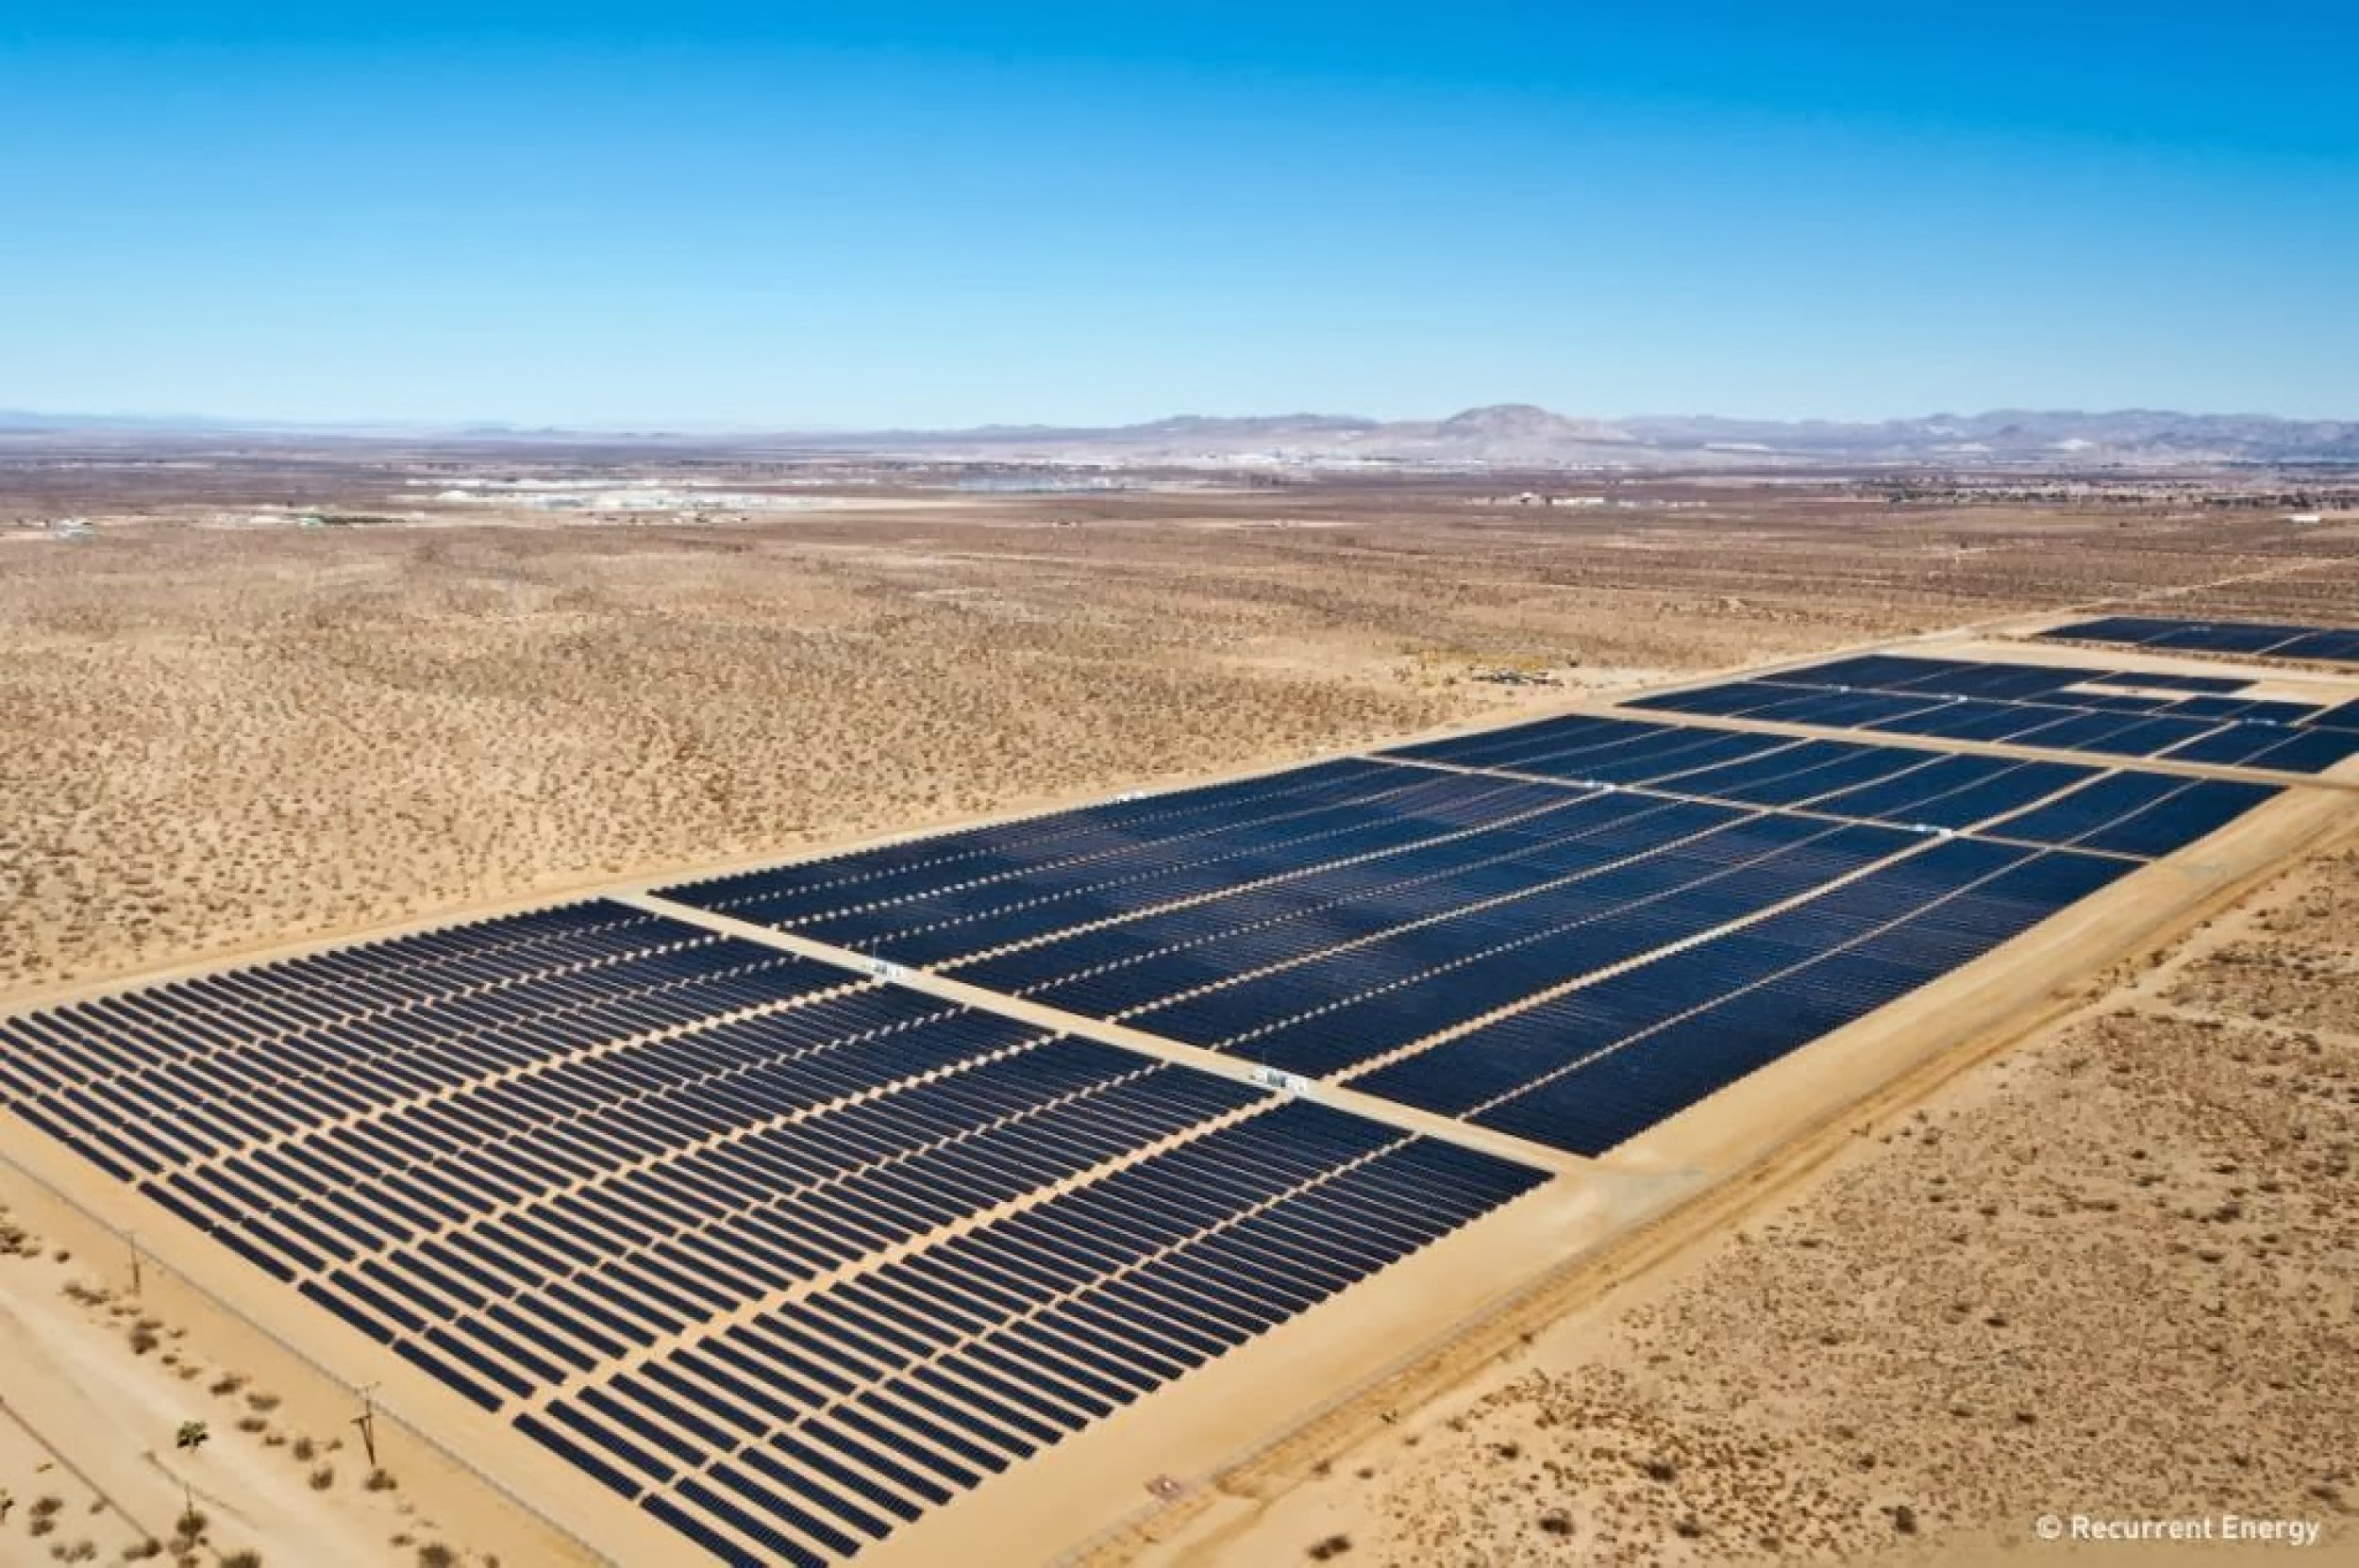 google-solar-panels-80-million-to-build-six-clean-energy-facilities